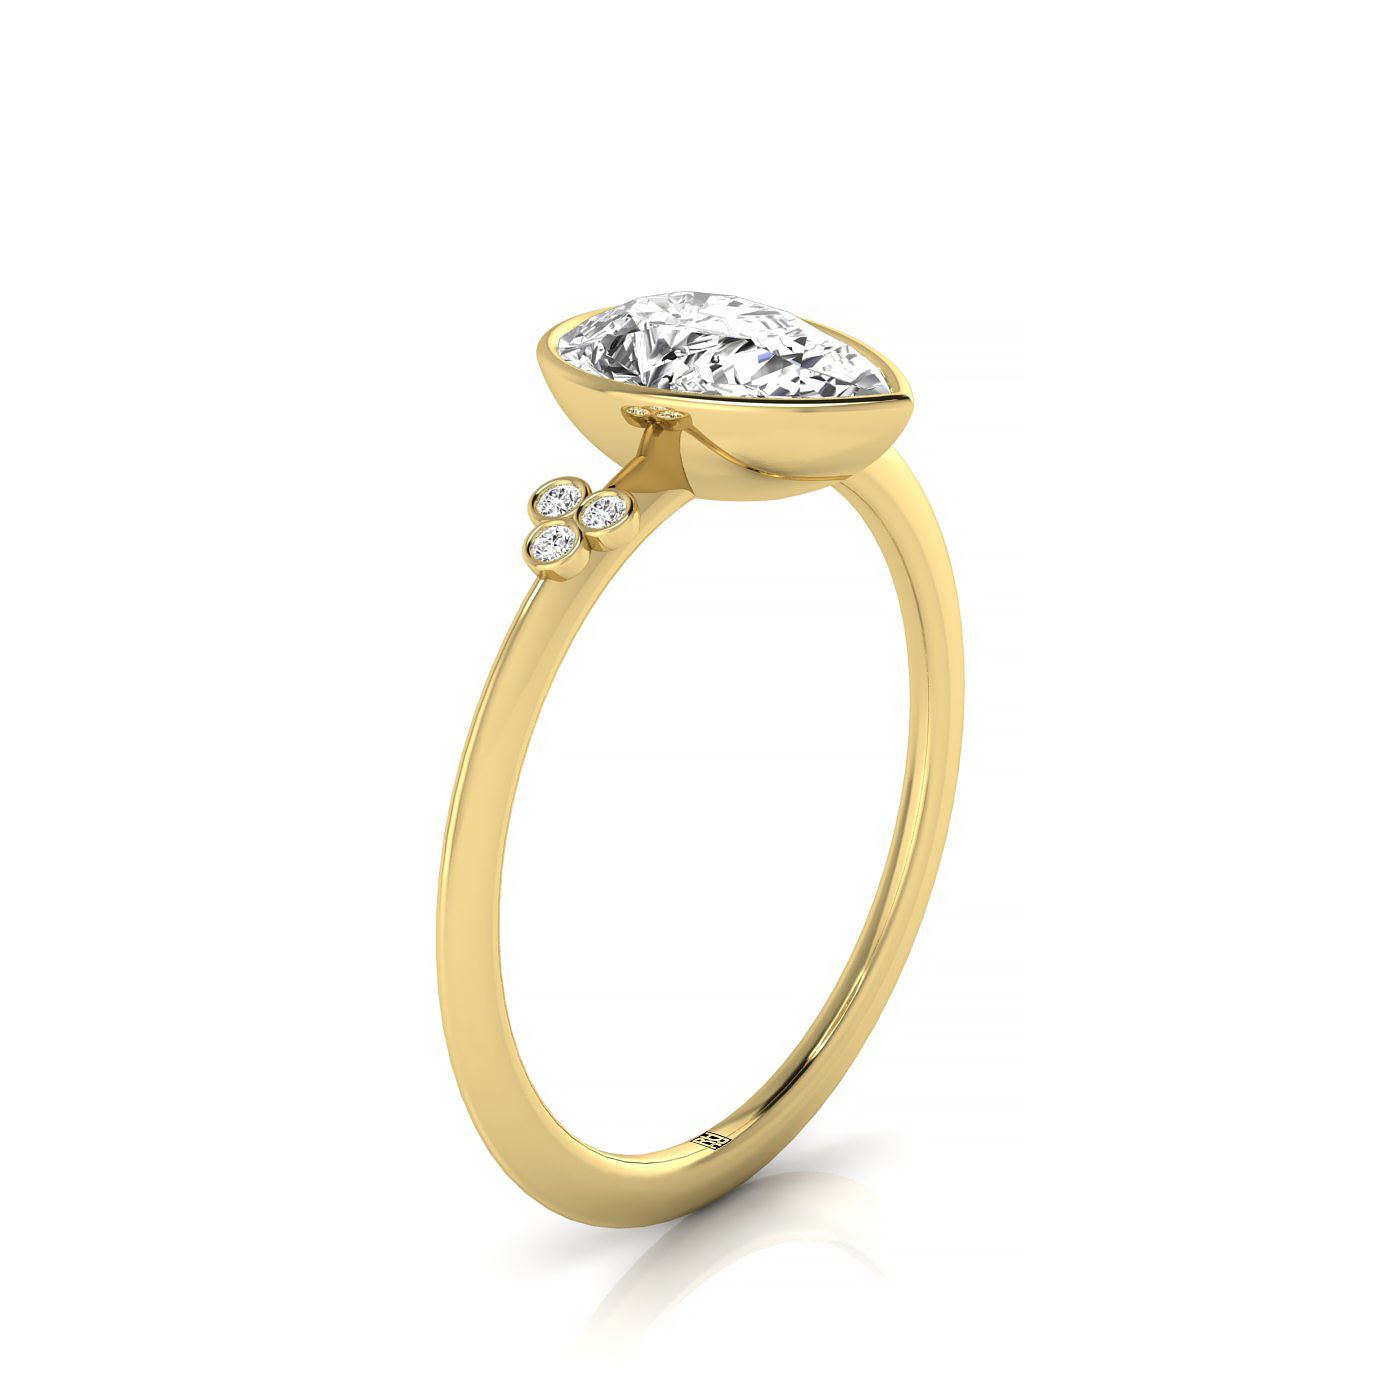 18ky Bezel Set Pear Engagement Ring With 6 Clover Bezel Set Round Diamonds On Shank